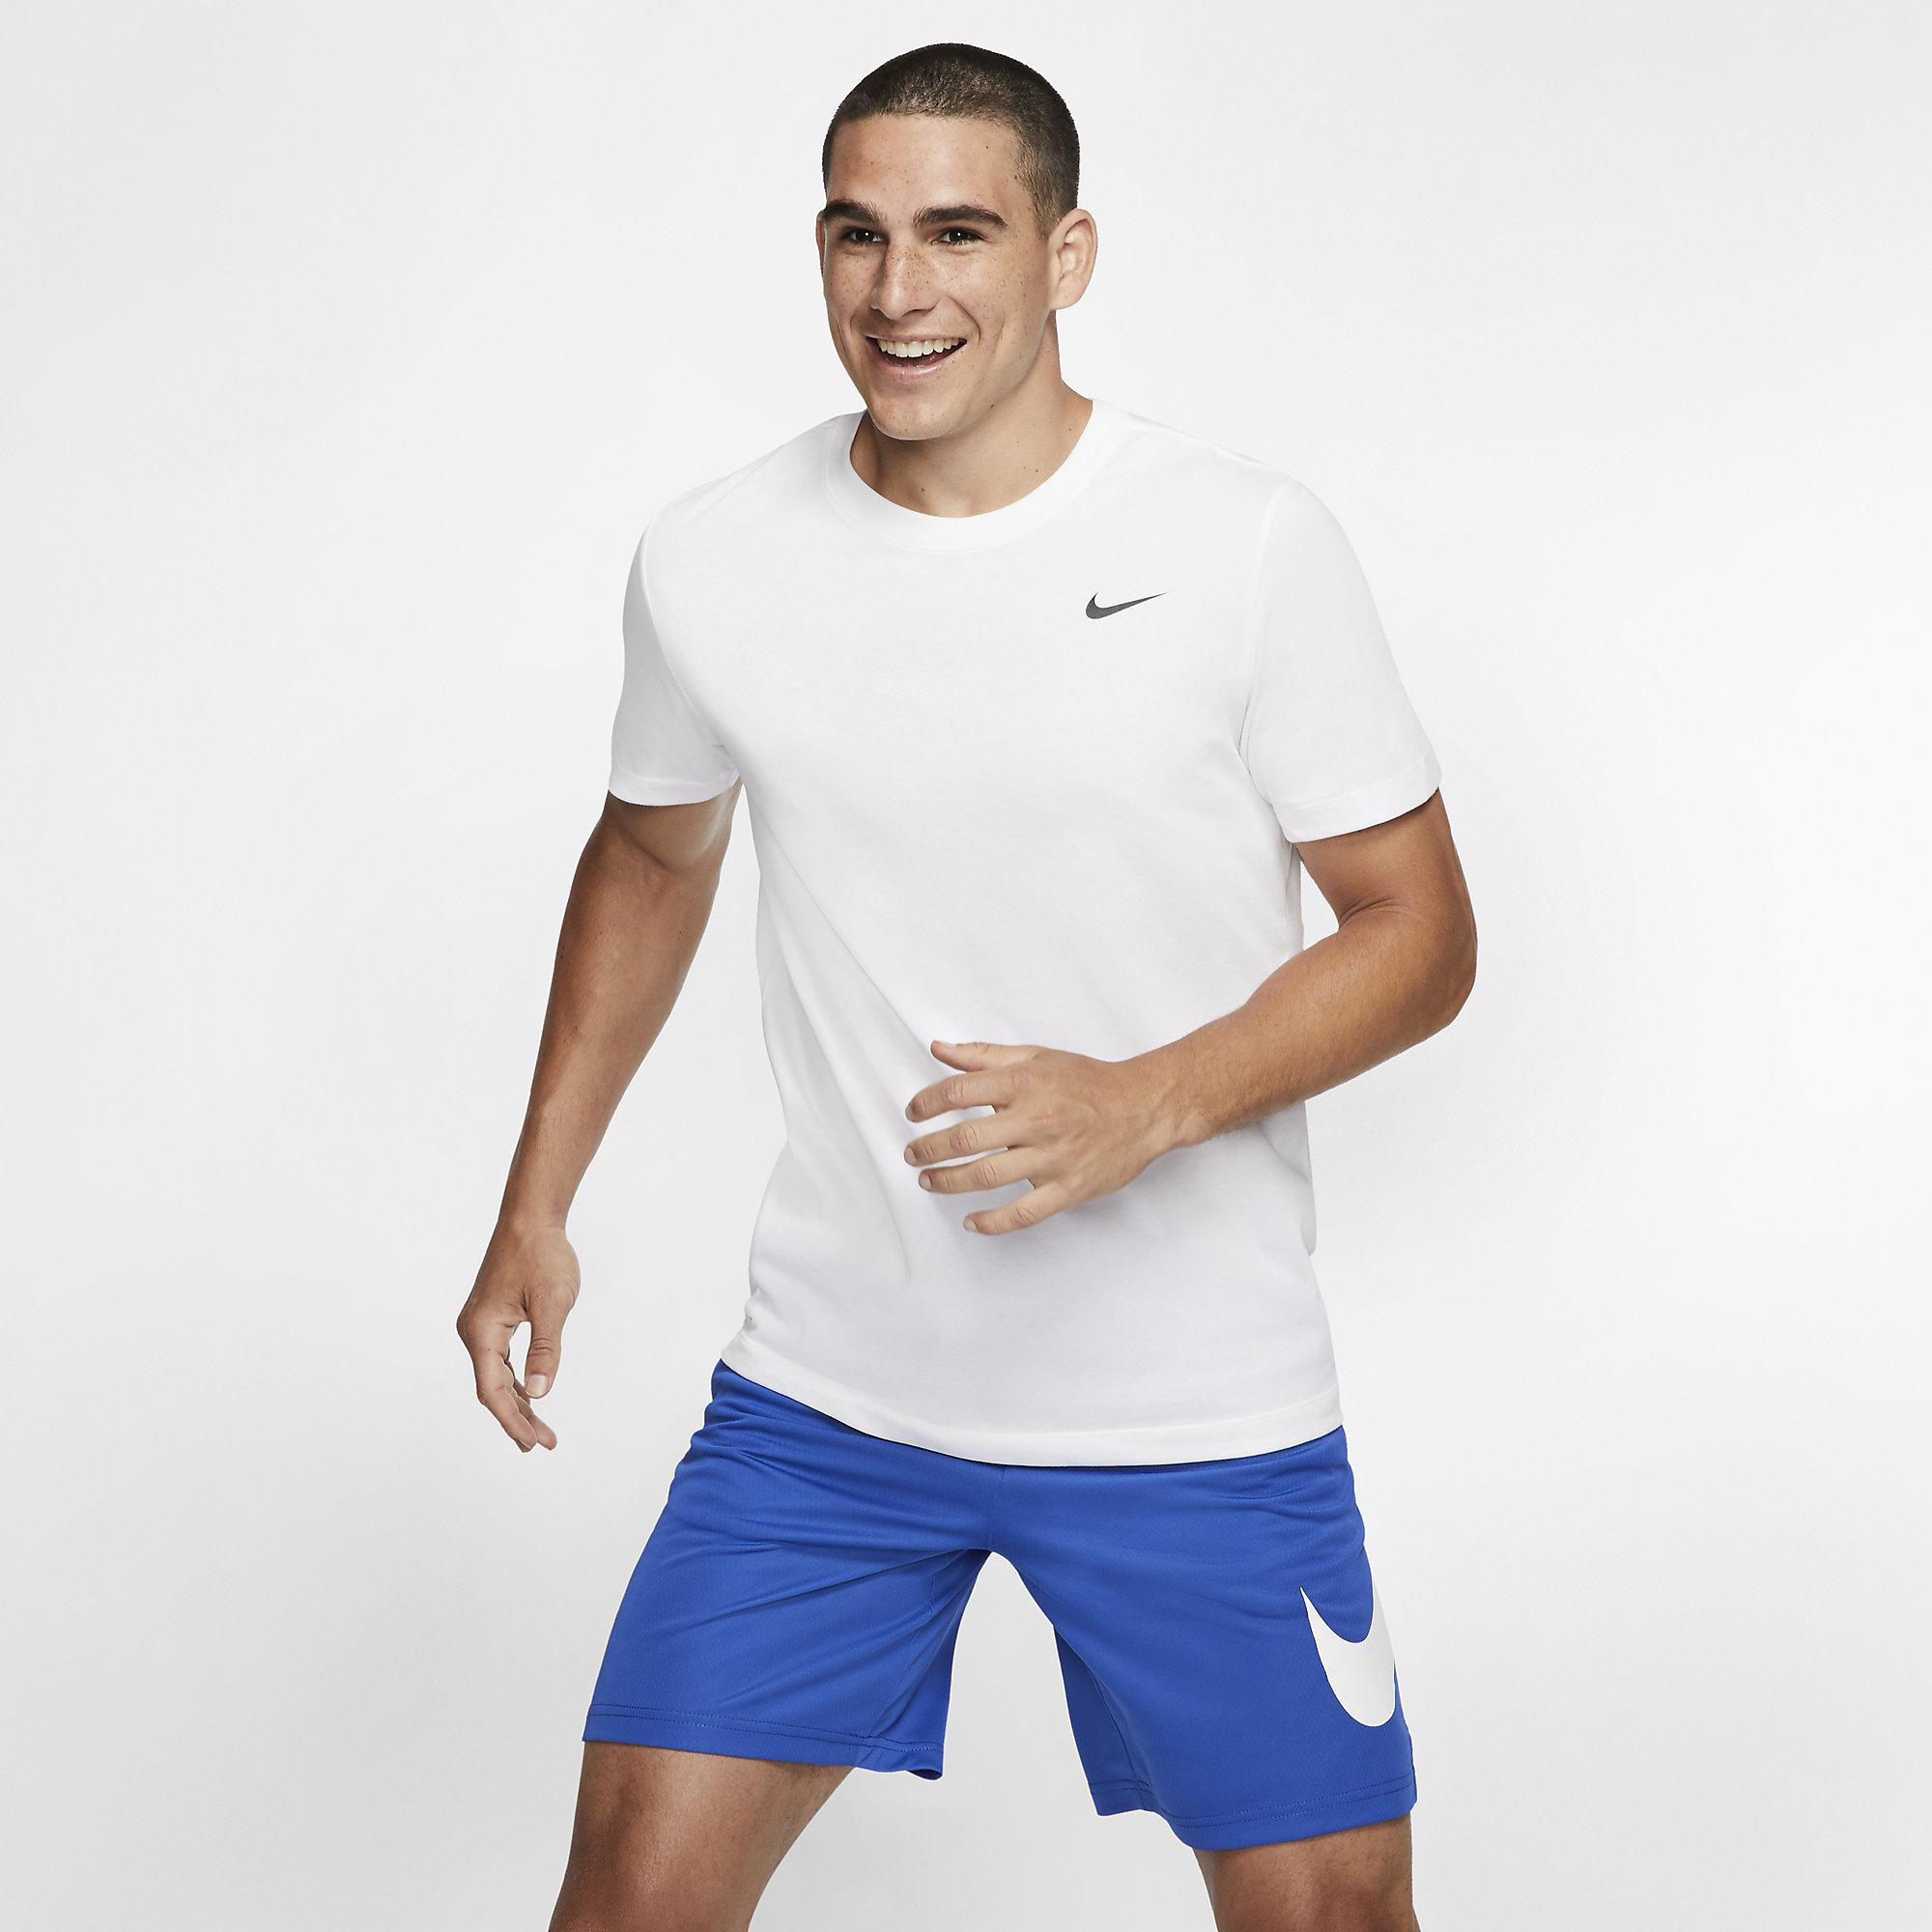 Nike Mens Dri-FIT Training Top - White - Tennisnuts.com